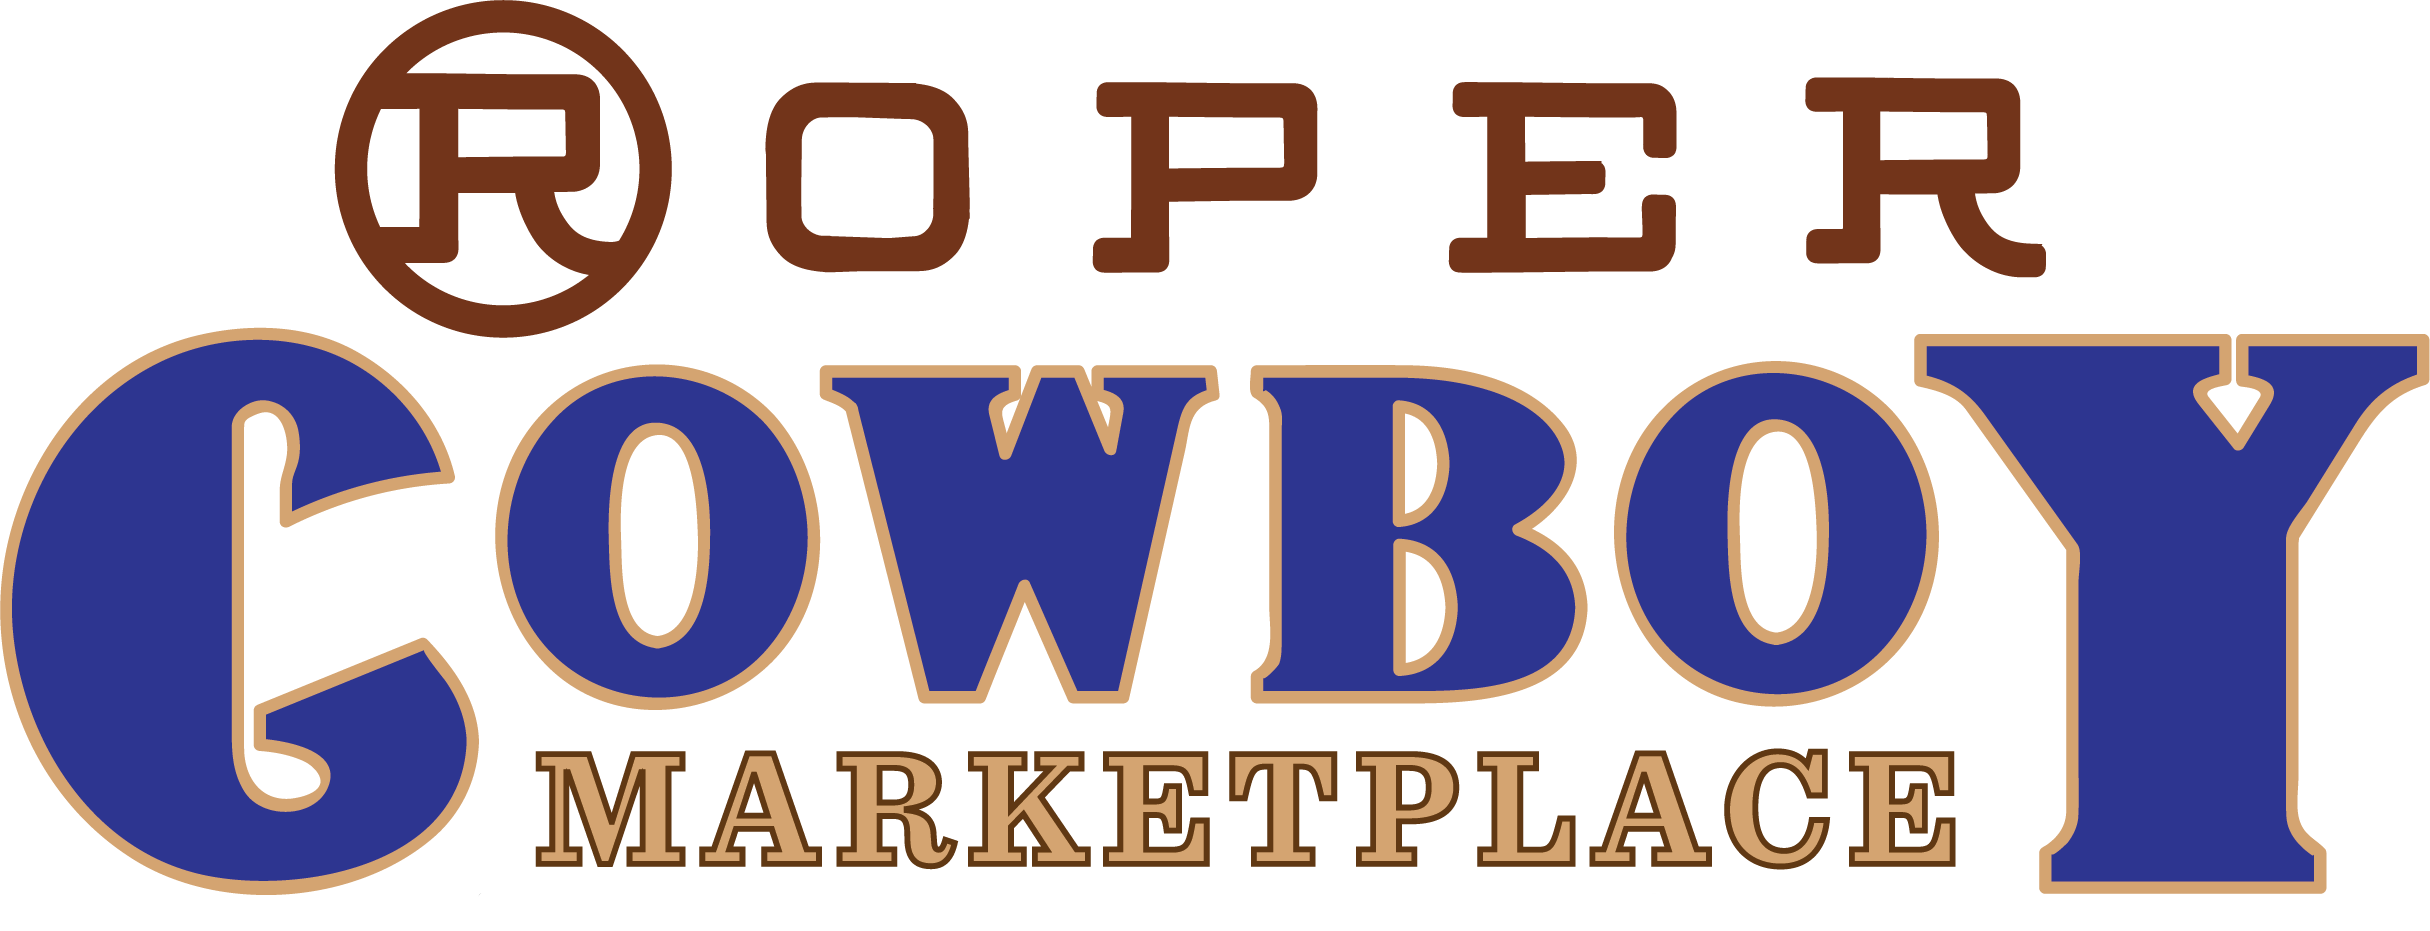 Roper Cowboy Marketplace